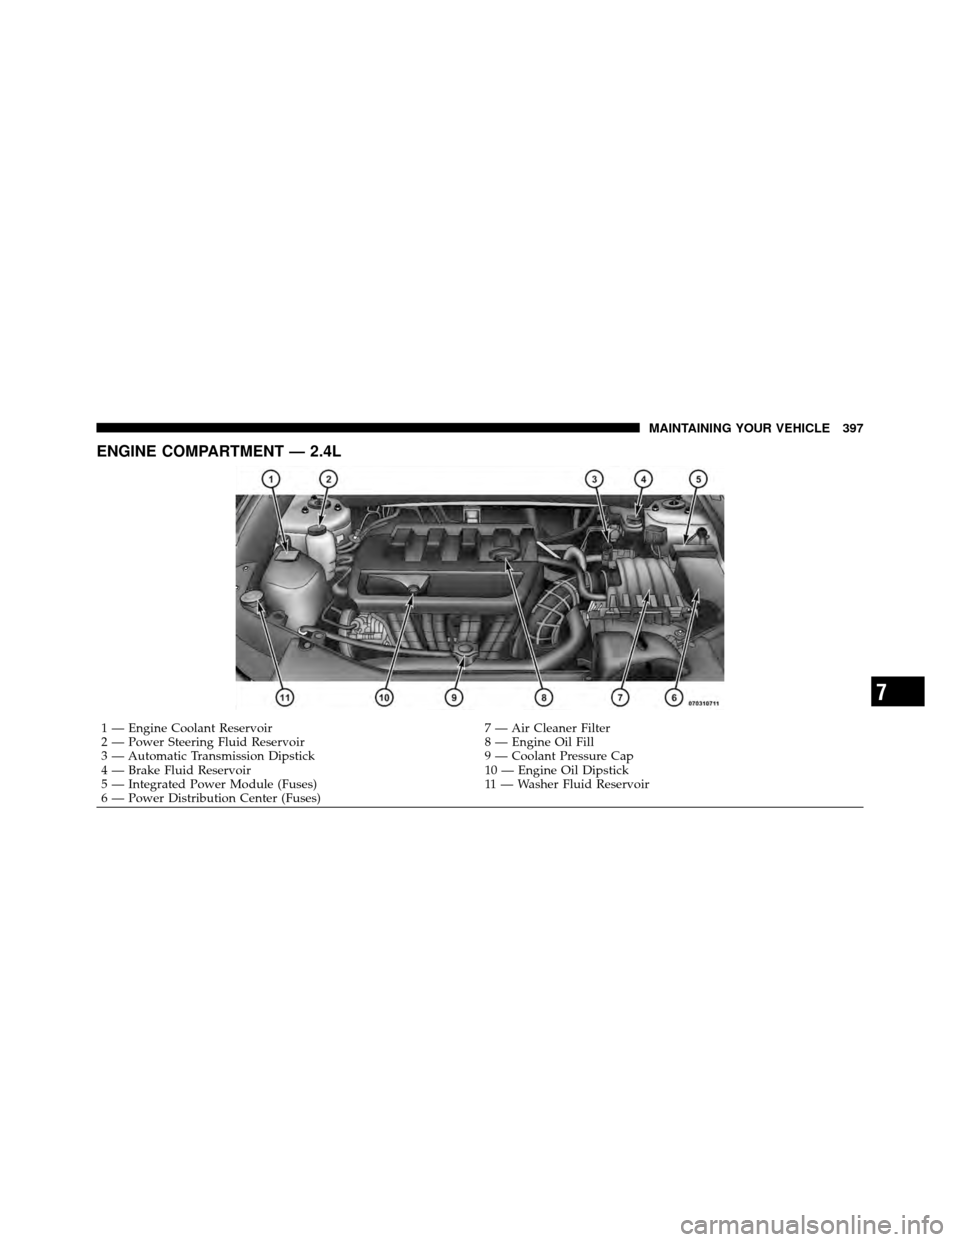 DODGE AVENGER 2011 2.G Owners Manual ENGINE COMPARTMENT — 2.4L
1 — Engine Coolant Reservoir7 — Air Cleaner Filter
2 — Power Steering Fluid Reservoir 8 — Engine Oil Fill
3 — Automatic Transmission Dipstick 9 — Coolant Pressu